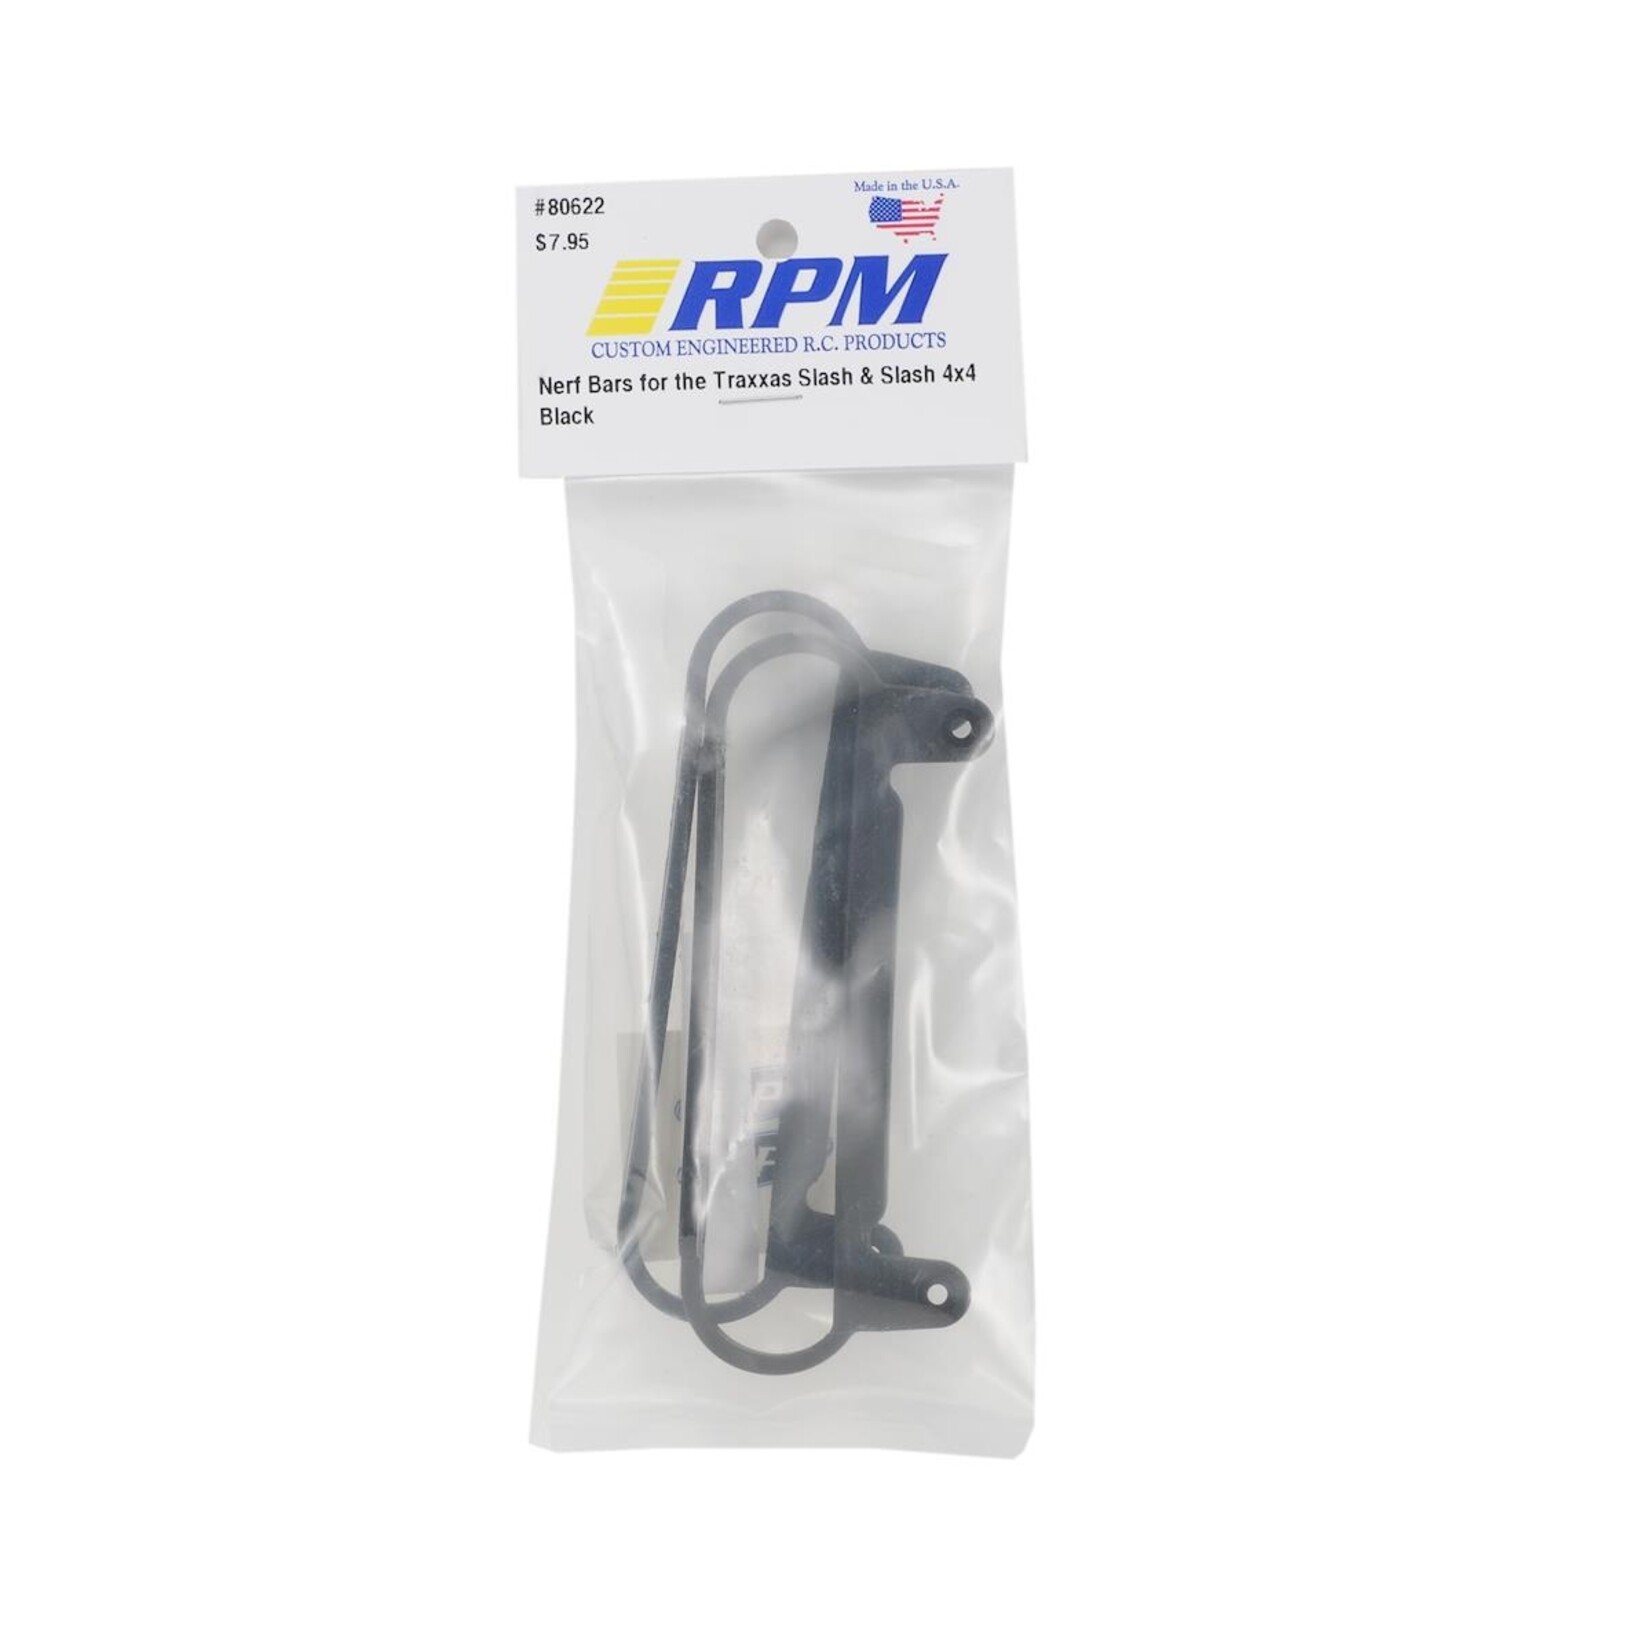 RPM RPM Traxxas Slash & Slash 4x4 Nerf Bars (Black)  #80622